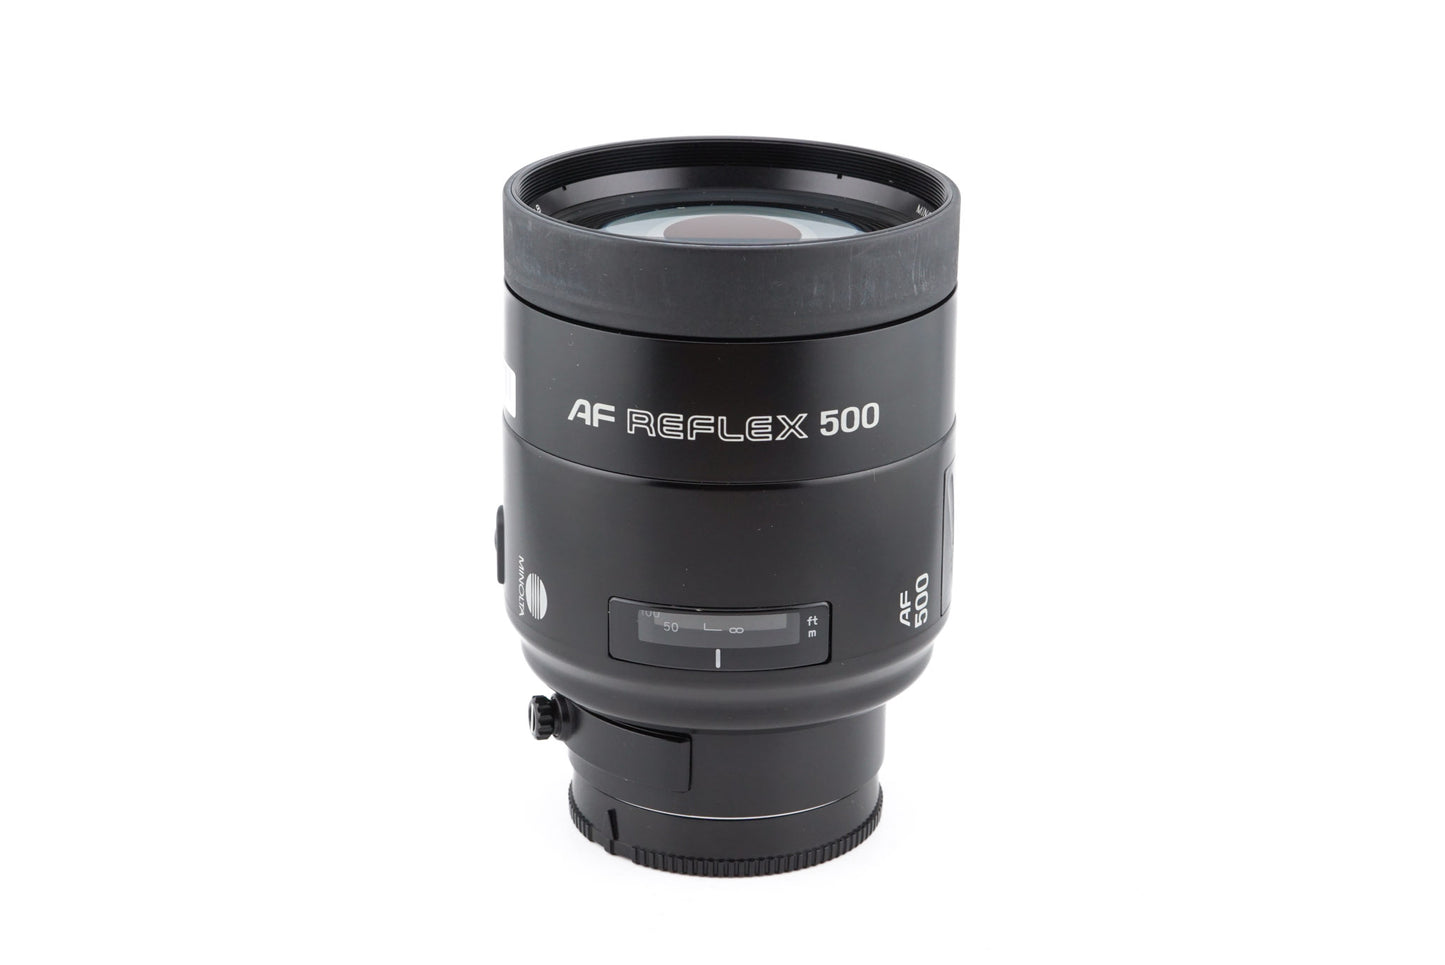 Minolta 500mm f8 AF Reflex - Lens